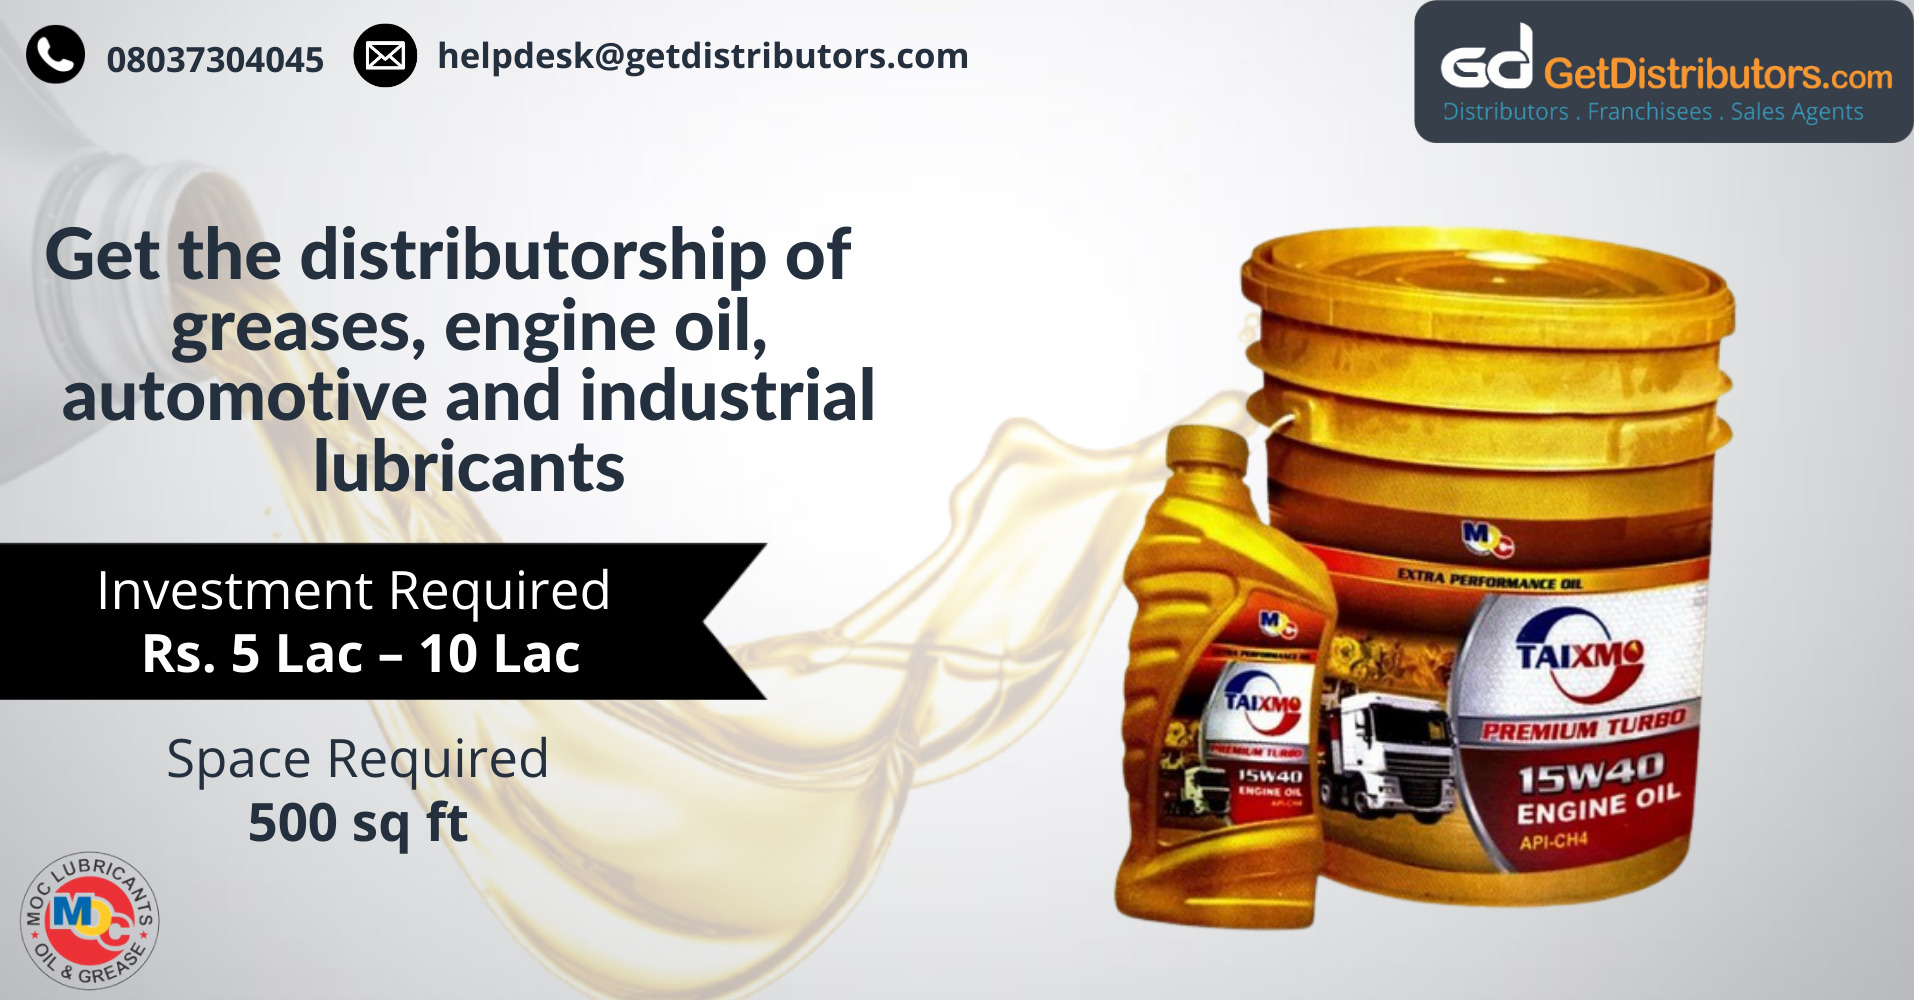 Take the distributorship of top-grade lubricants